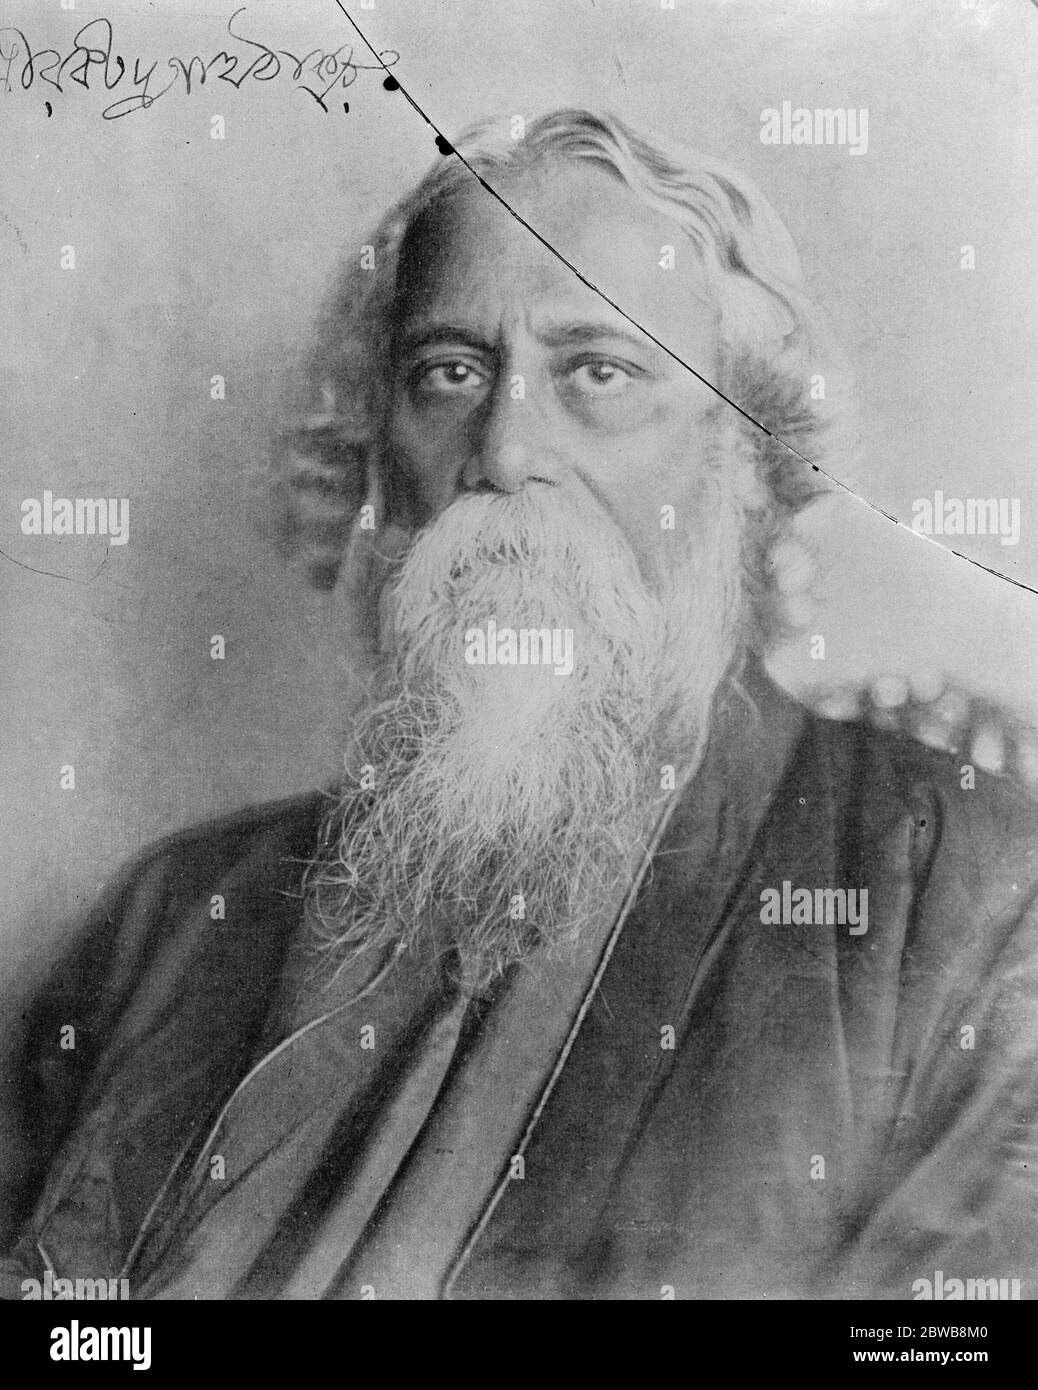 Rabindranath Tagore, Indiens berühmtester Dichter. Februar 1925 Stockfoto